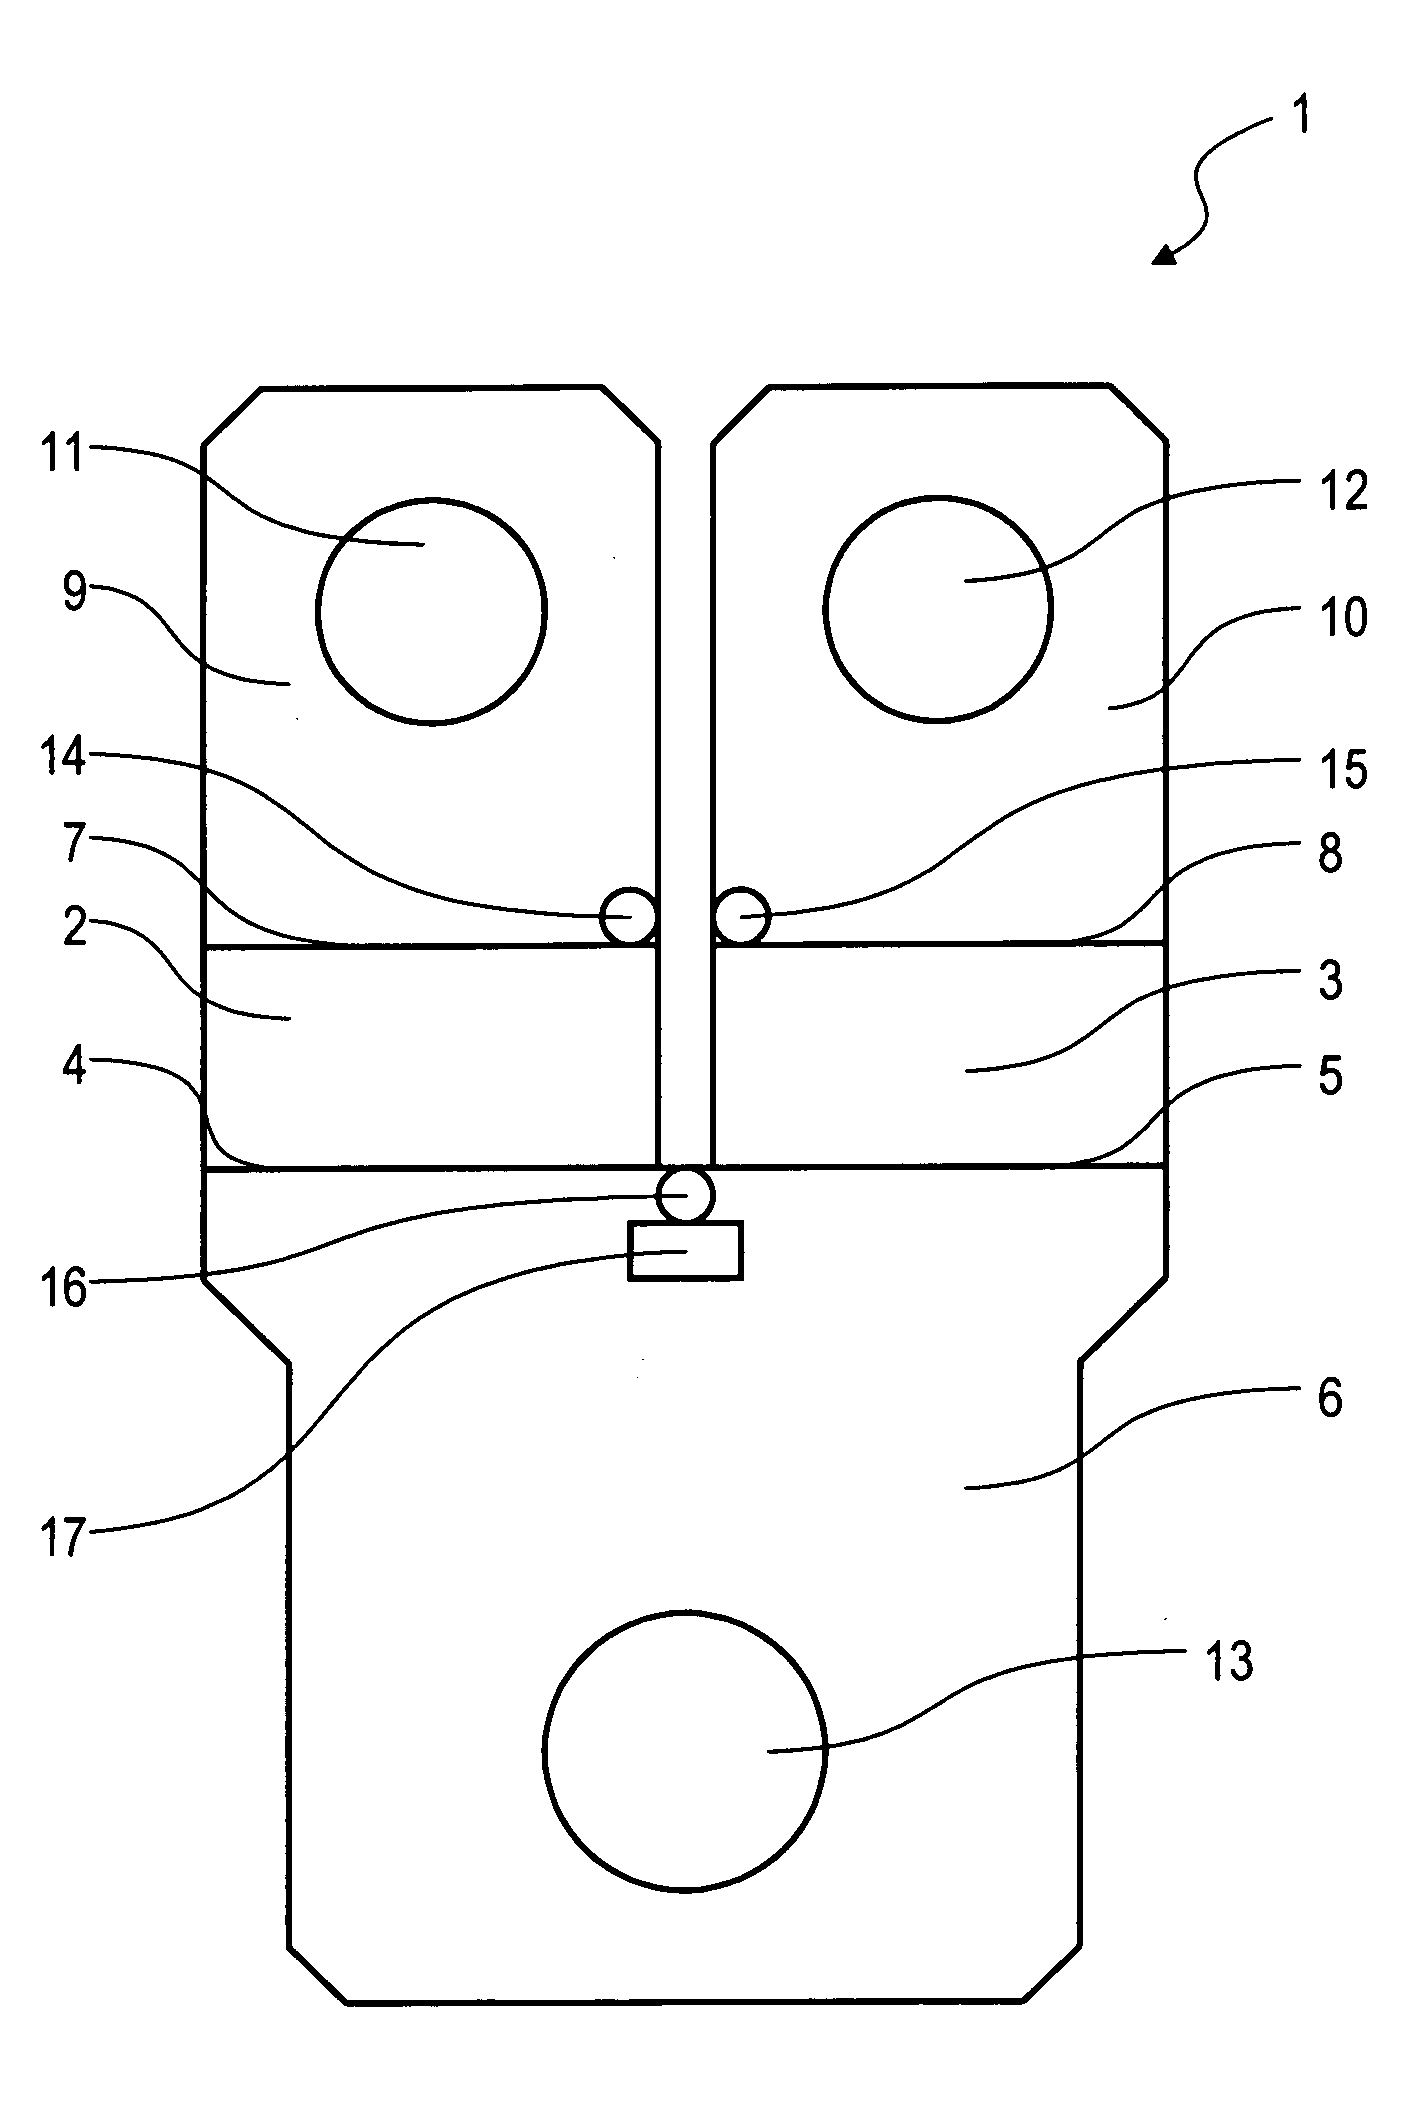 Resistor arrangement, manufacturing method, and measurement circuit